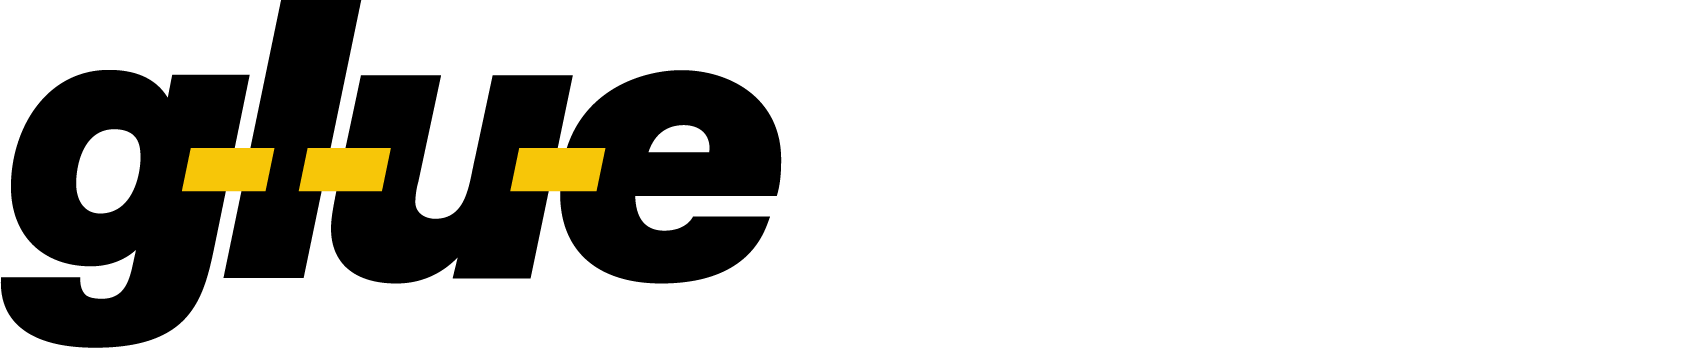 glue logo 1